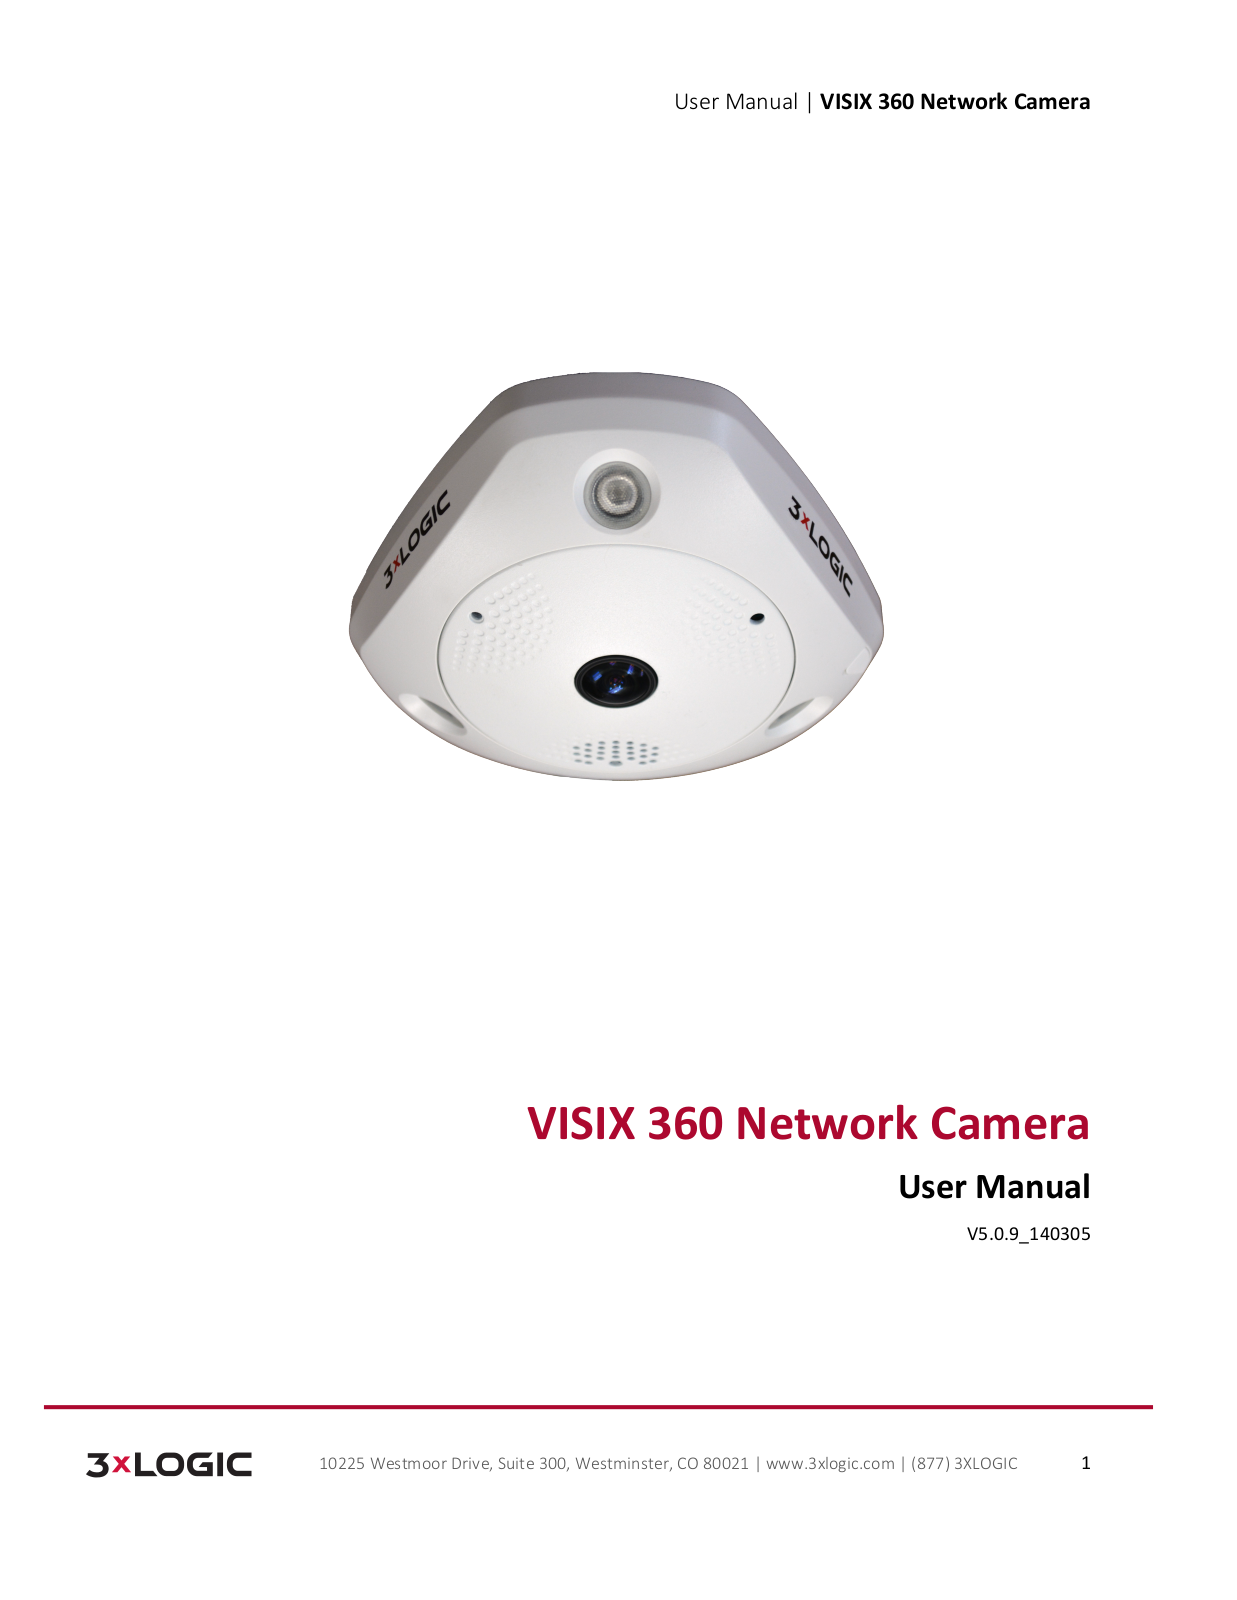 3xLOGIC VISIX Camera User Manual